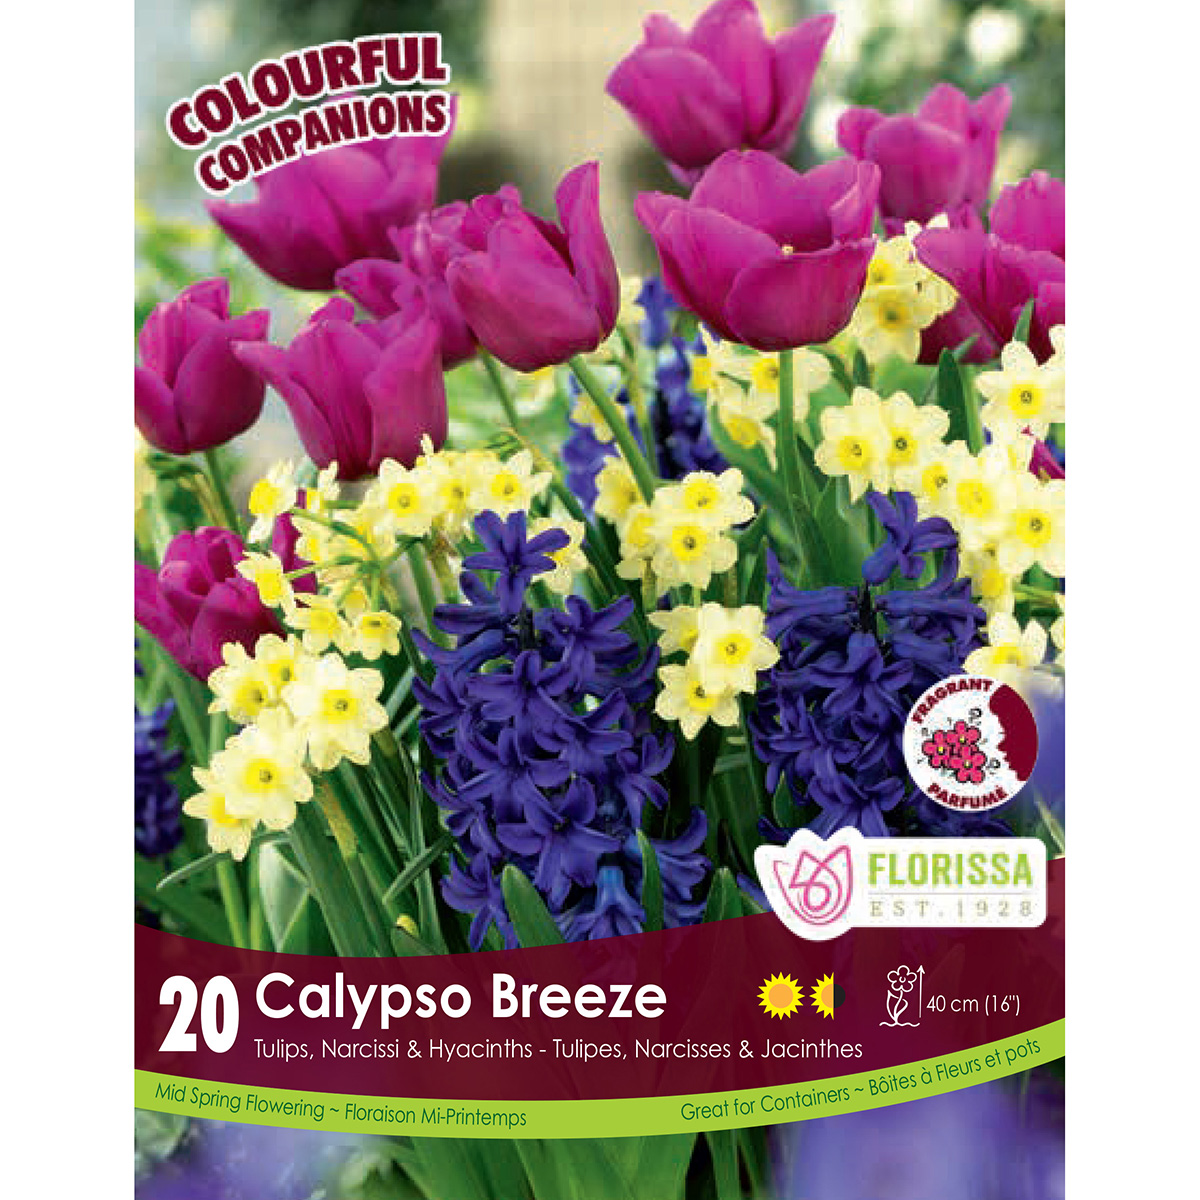 Colourful Companions Tulipa 'Calypso Breeze' 20PK